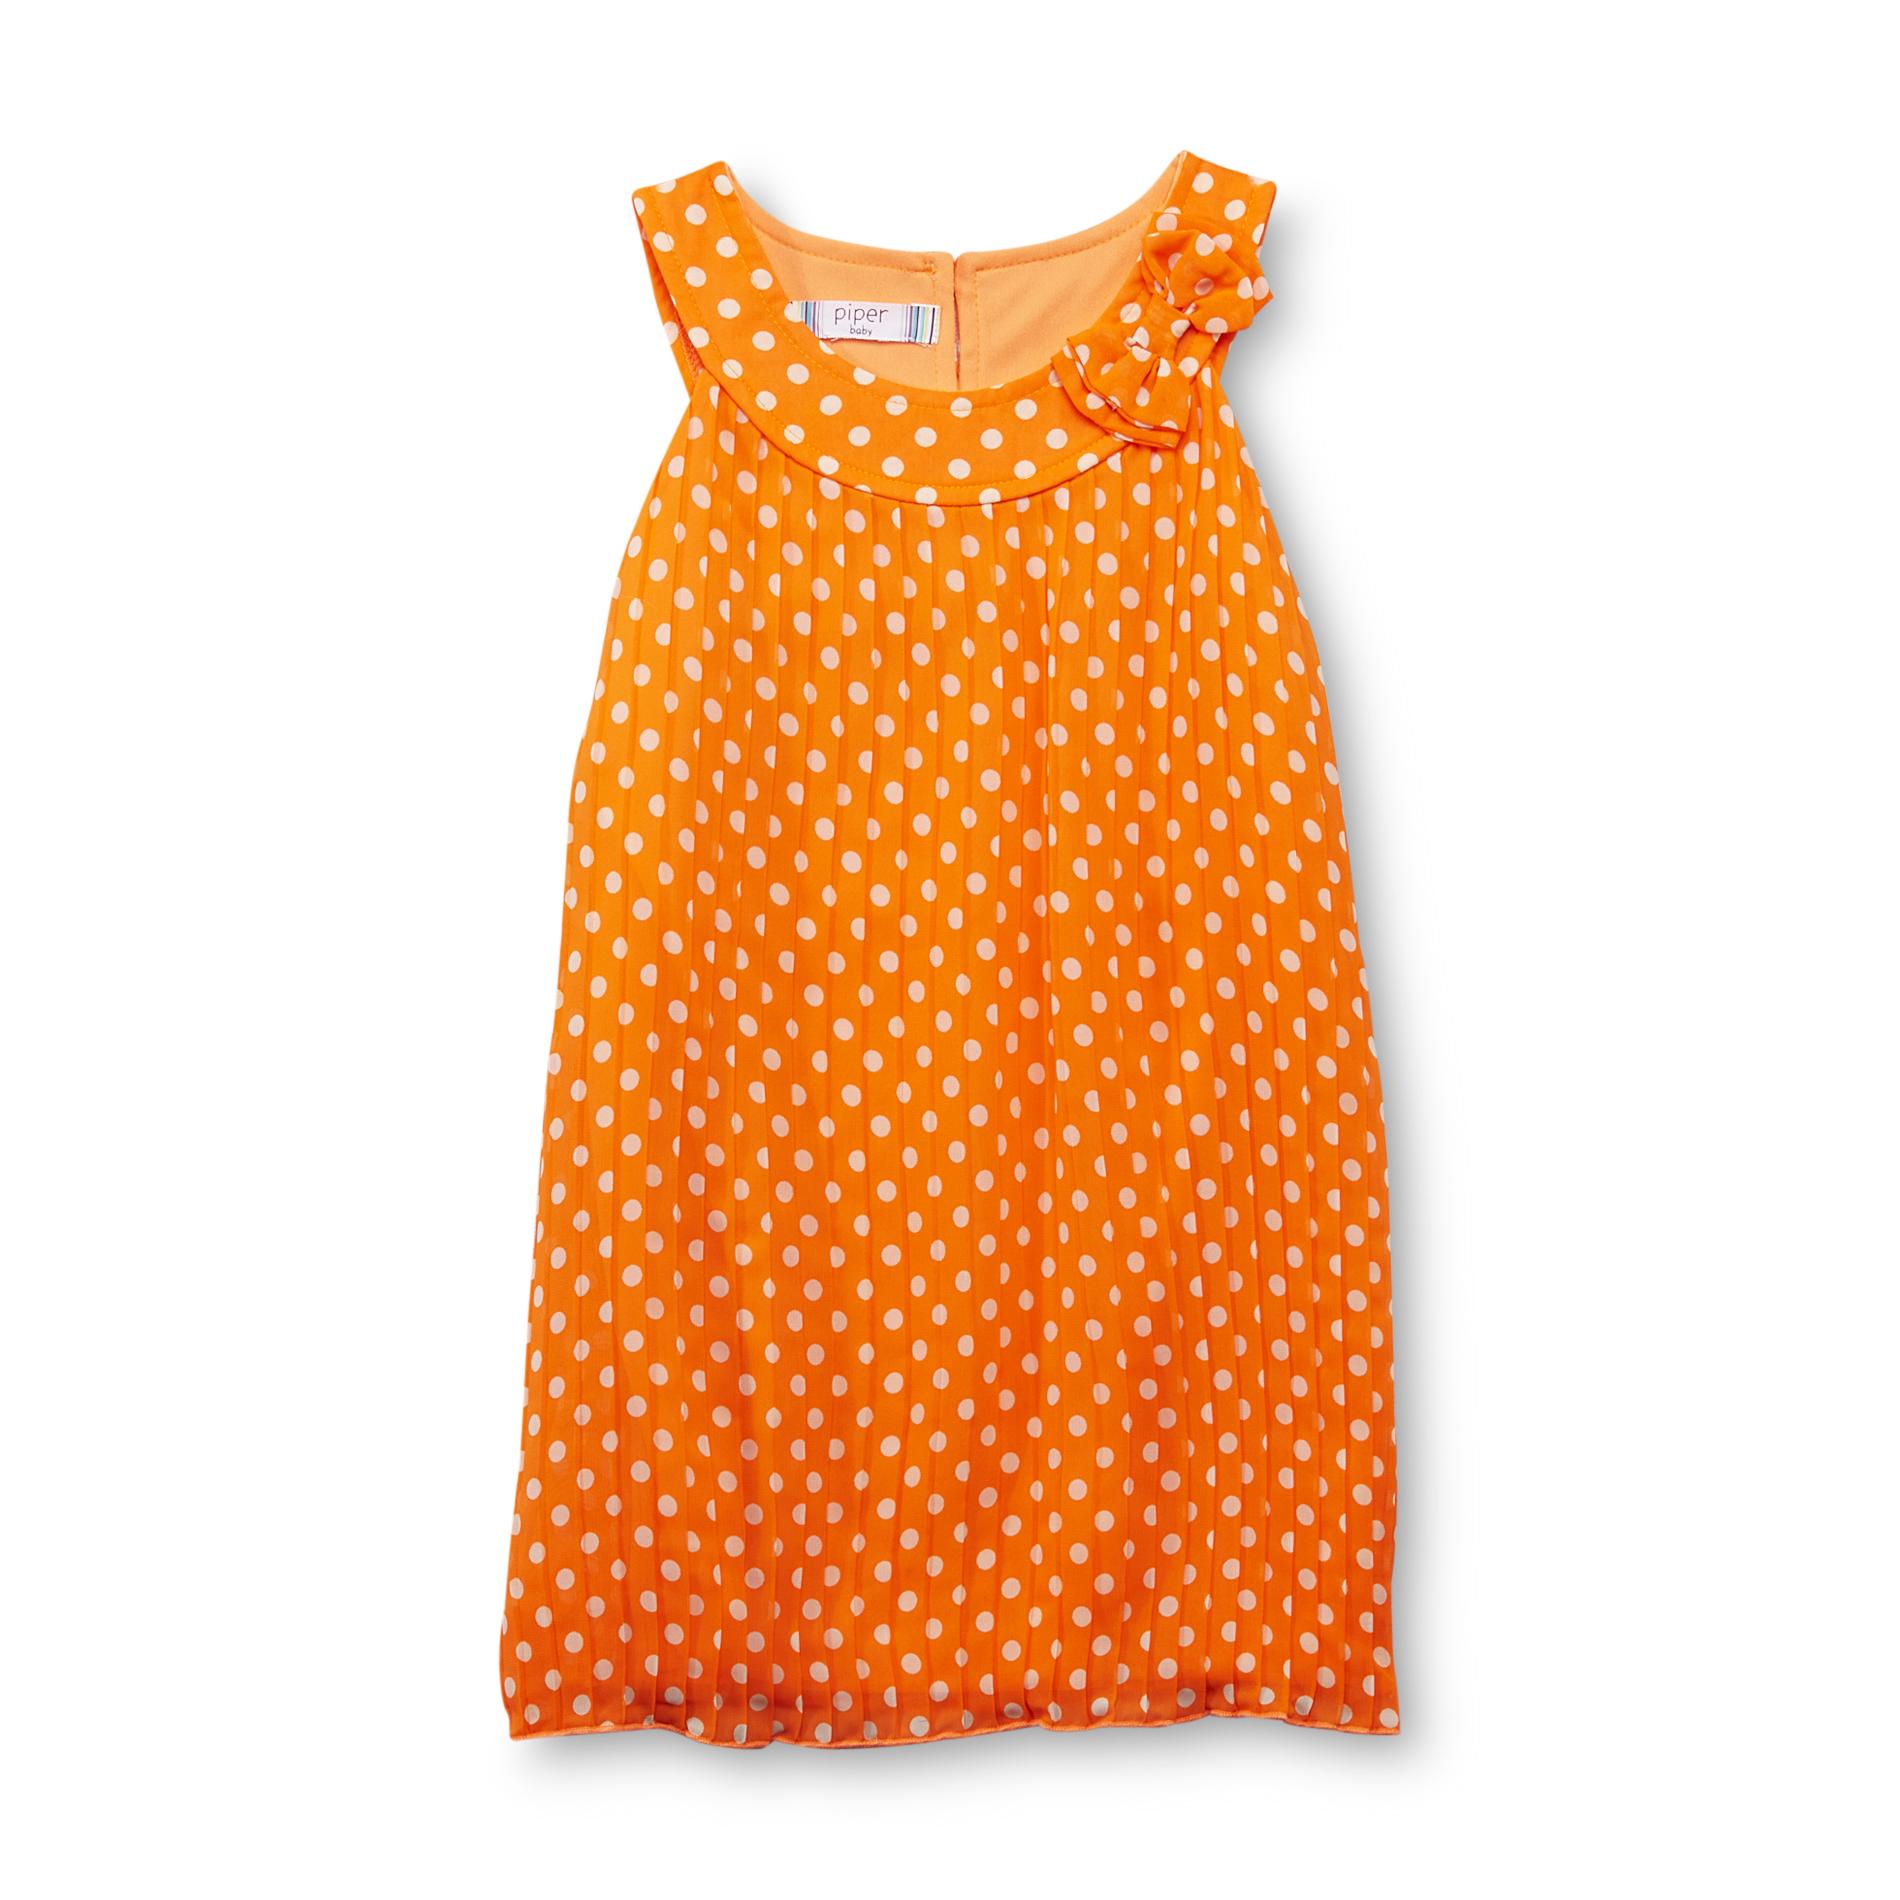 Piper Infant & Toddler Girl's Chiffon Dress - Polka Dots